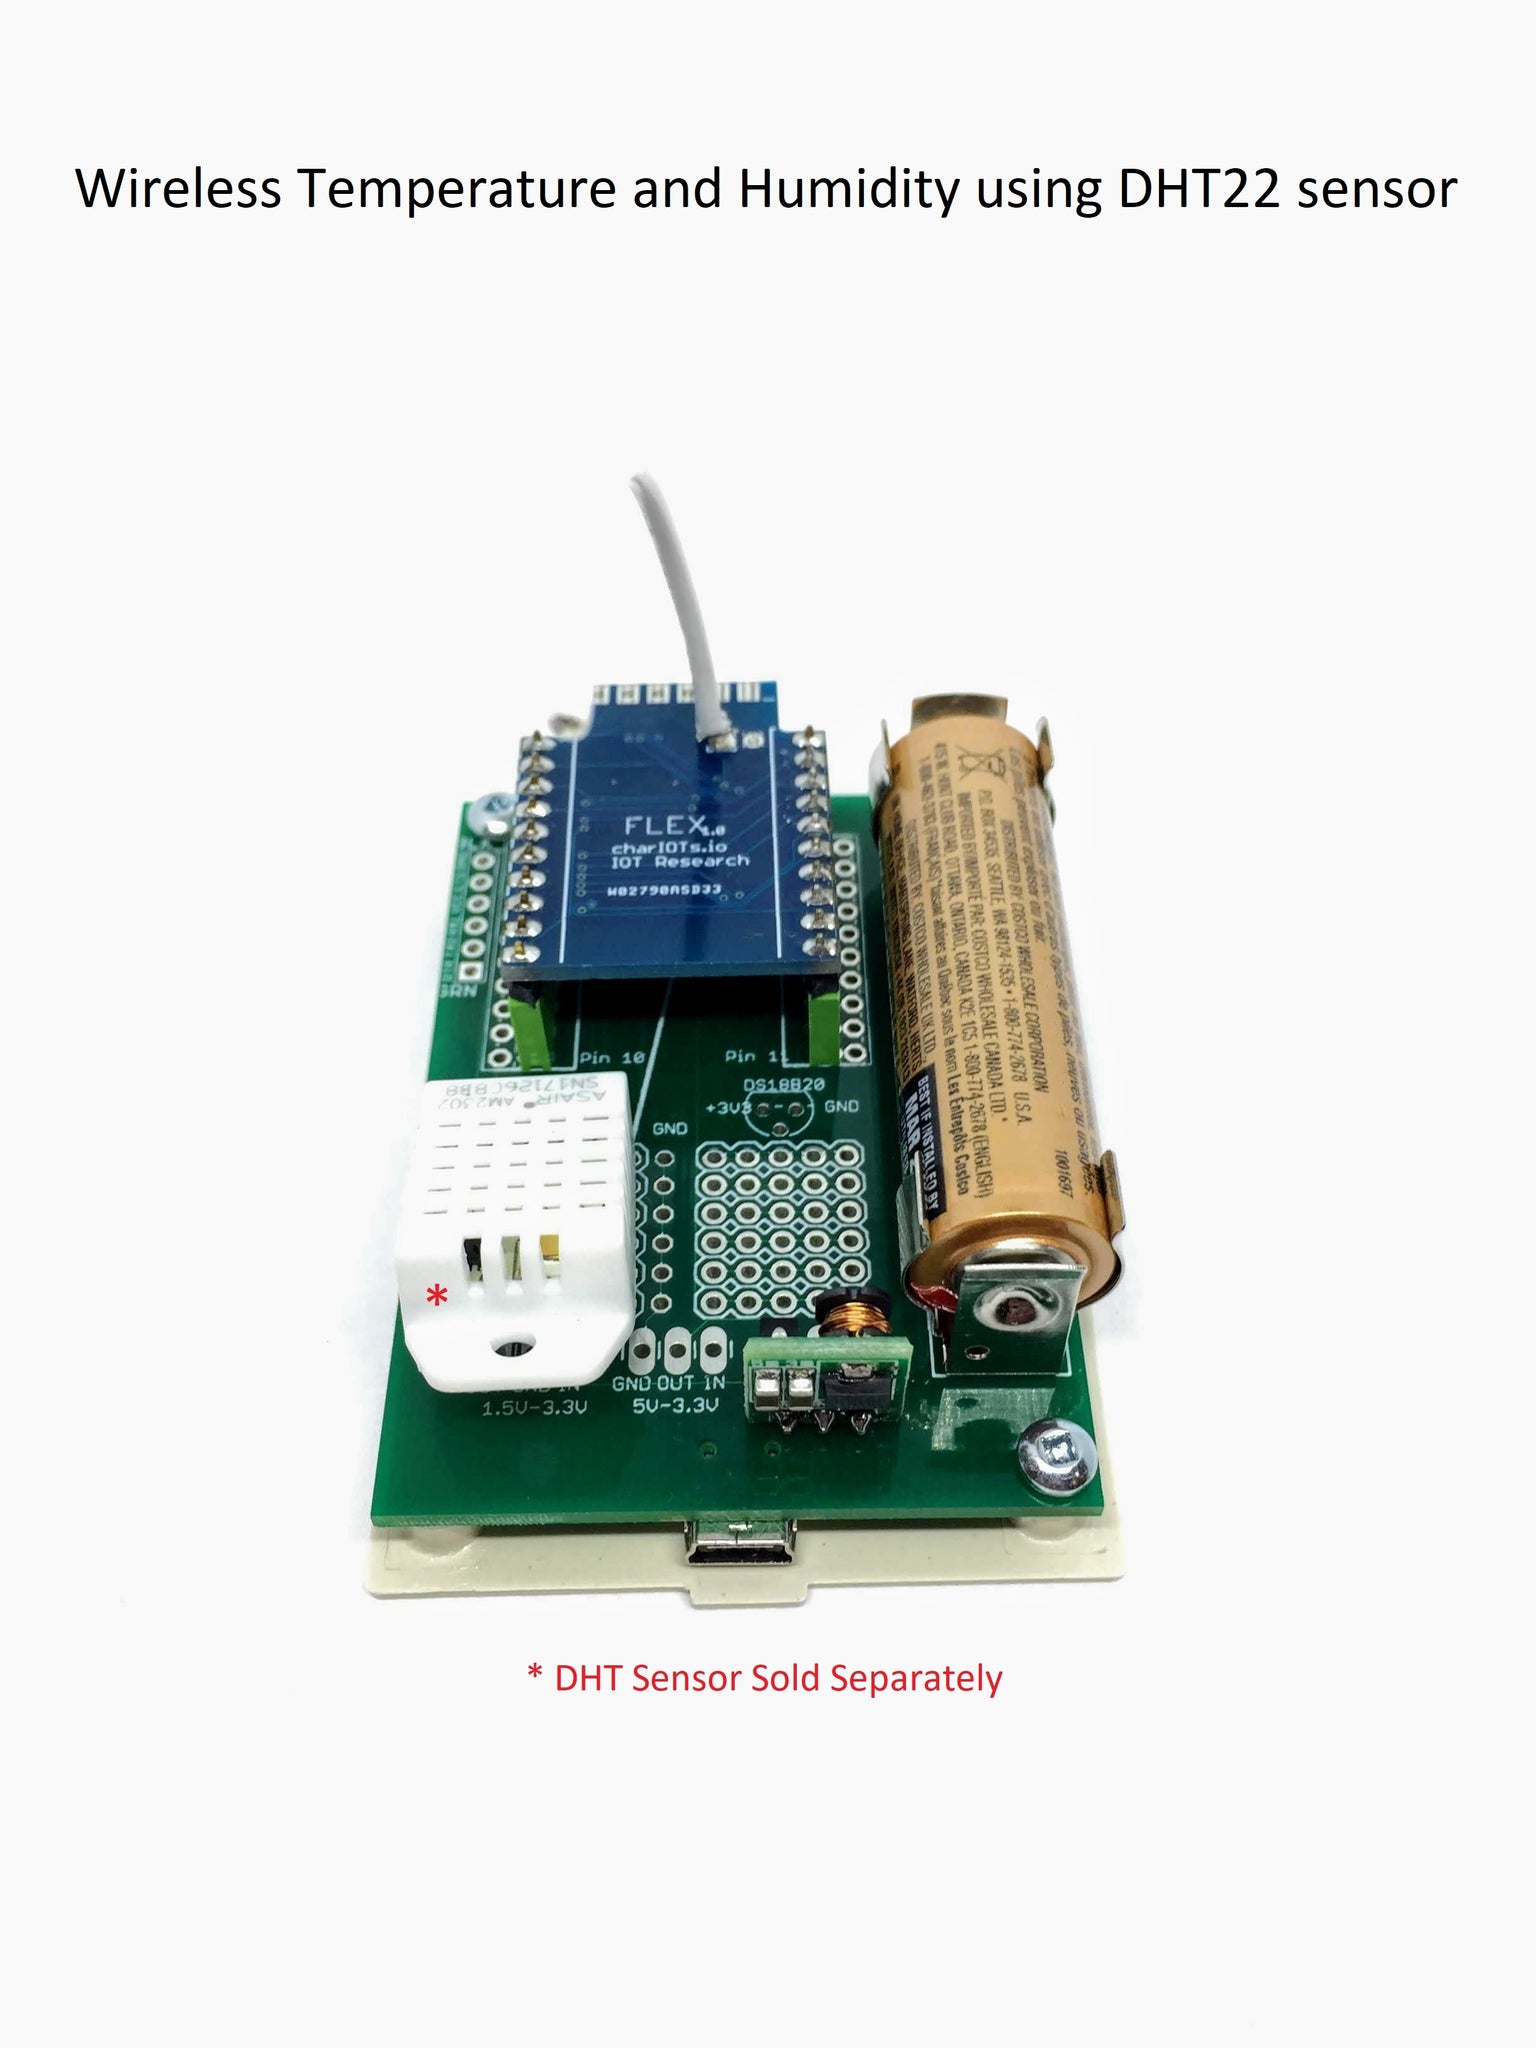 Wireless Temperature & Humidity Sensor – JemRF